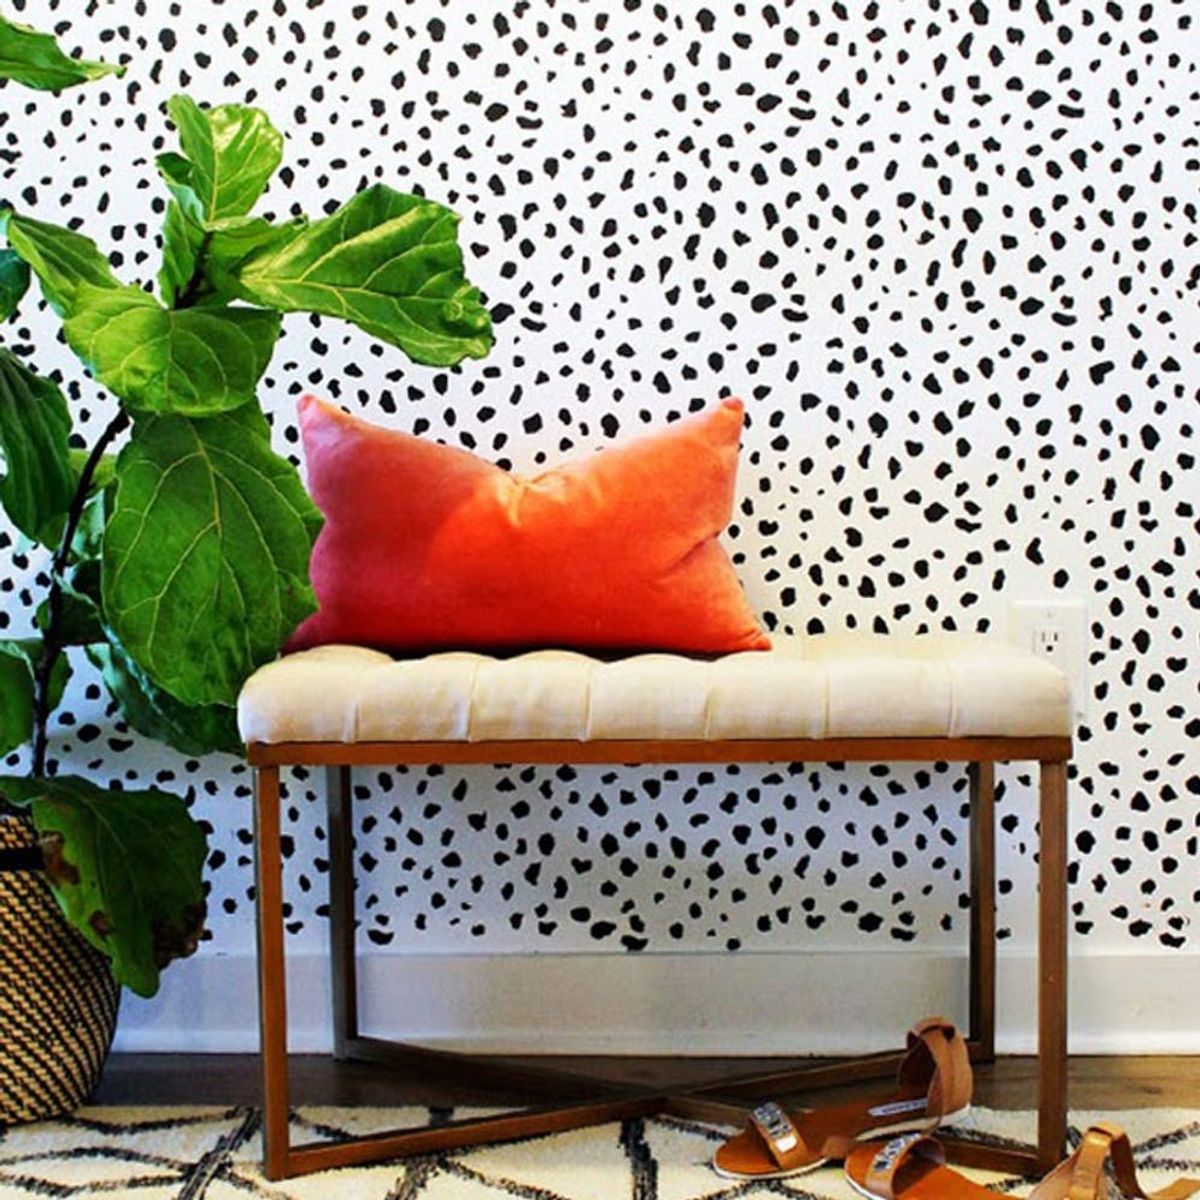 Trend Alert: 7 Modern Dalmatian Print Walls That Make a Statement